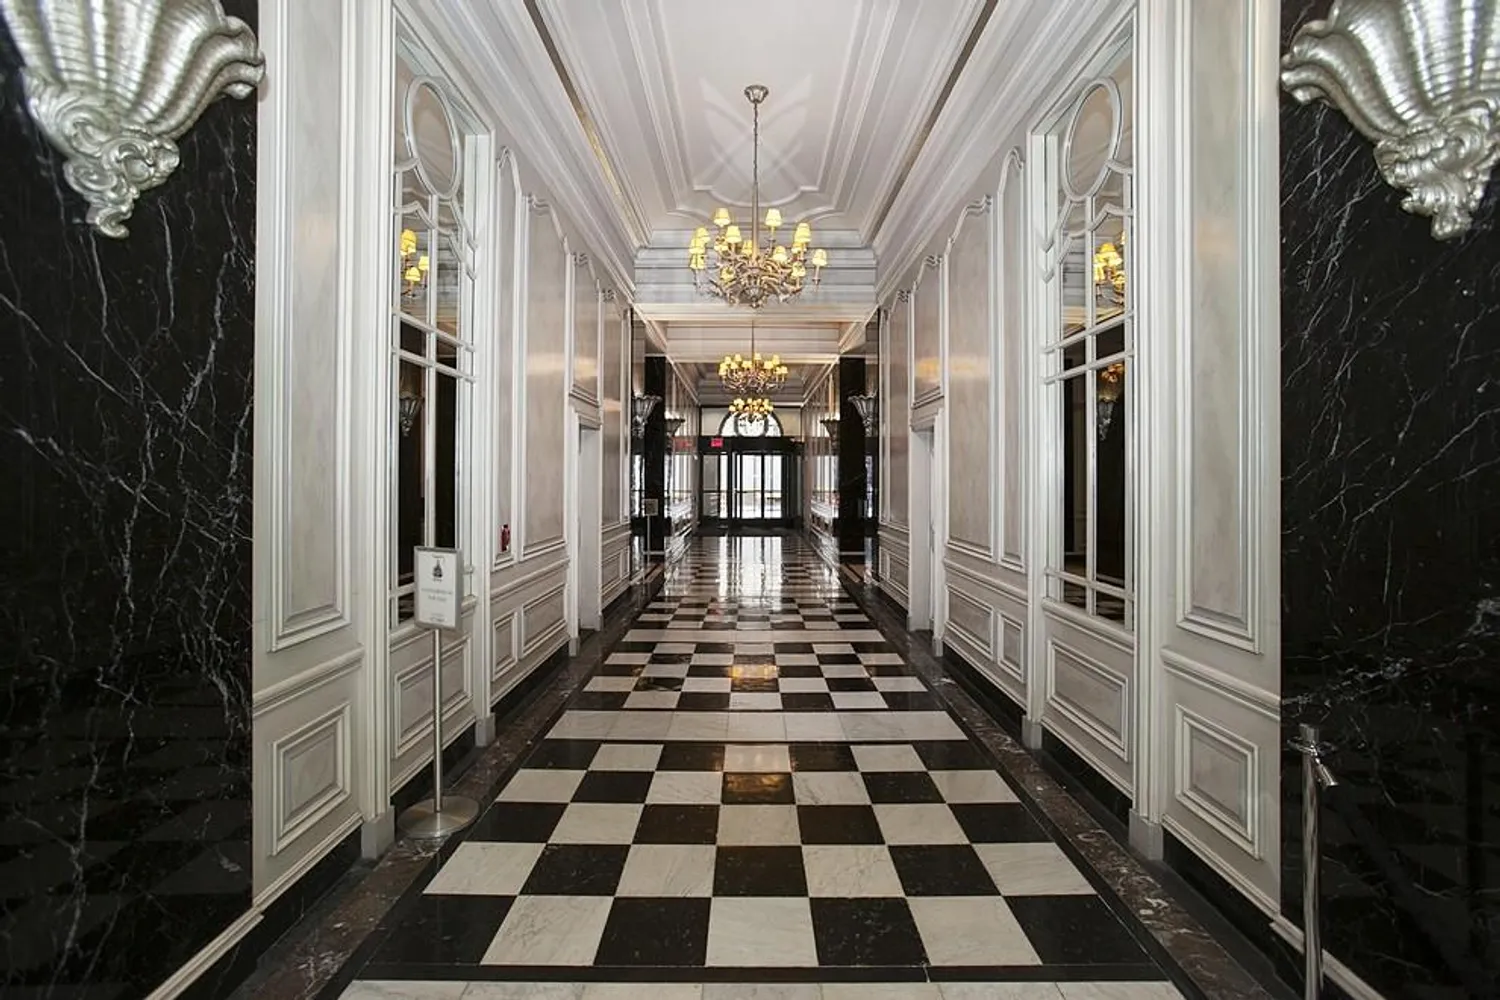 Lobby Hallway with Chandeliers 